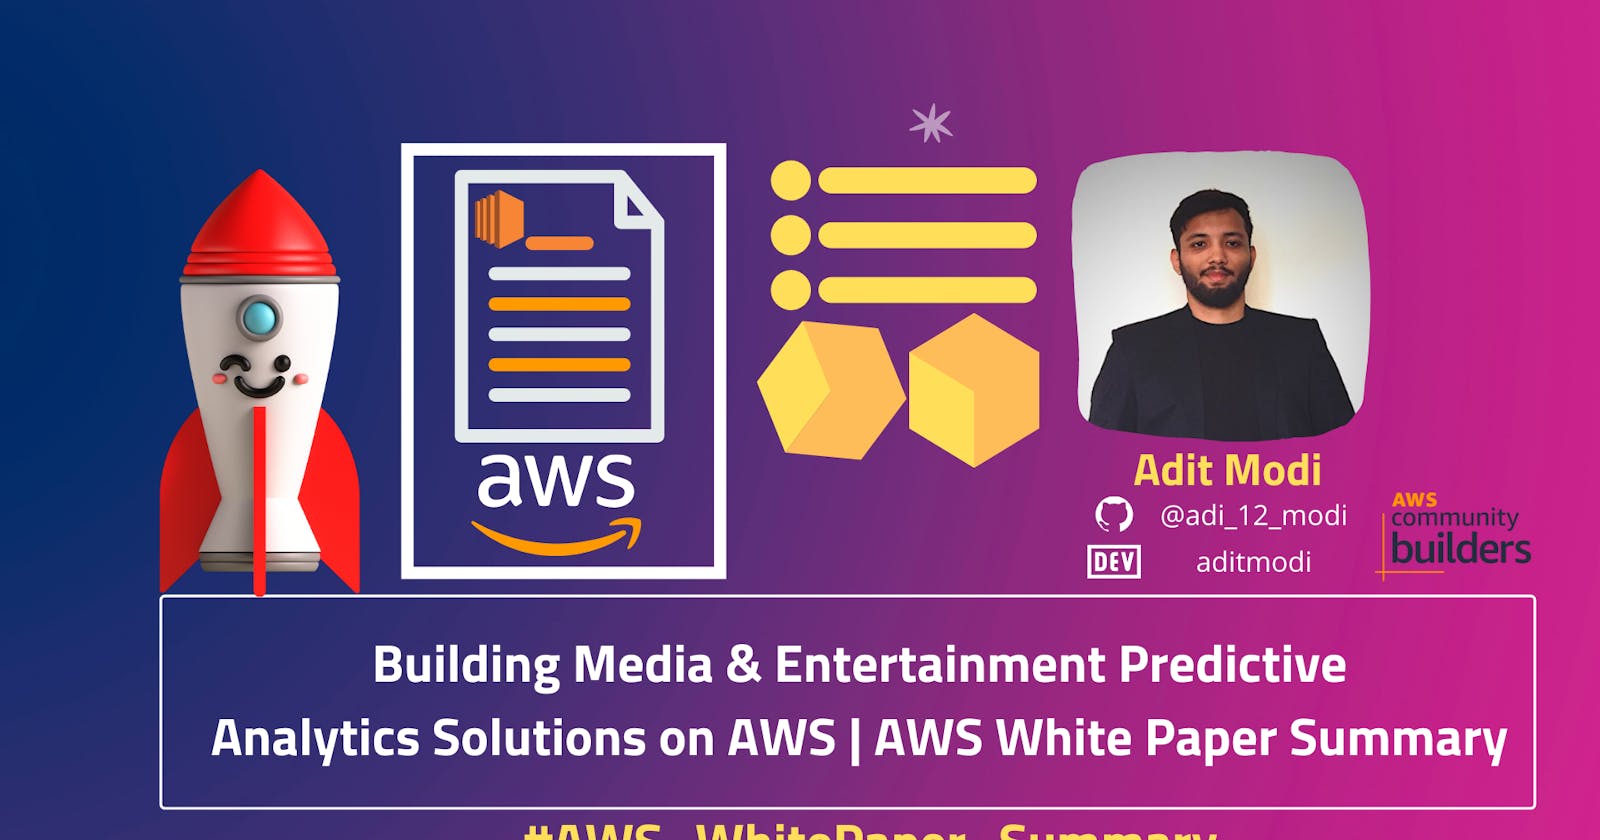 Building Media & Entertainment Predictive
Analytics Solutions on AWS | AWS White Paper Summary